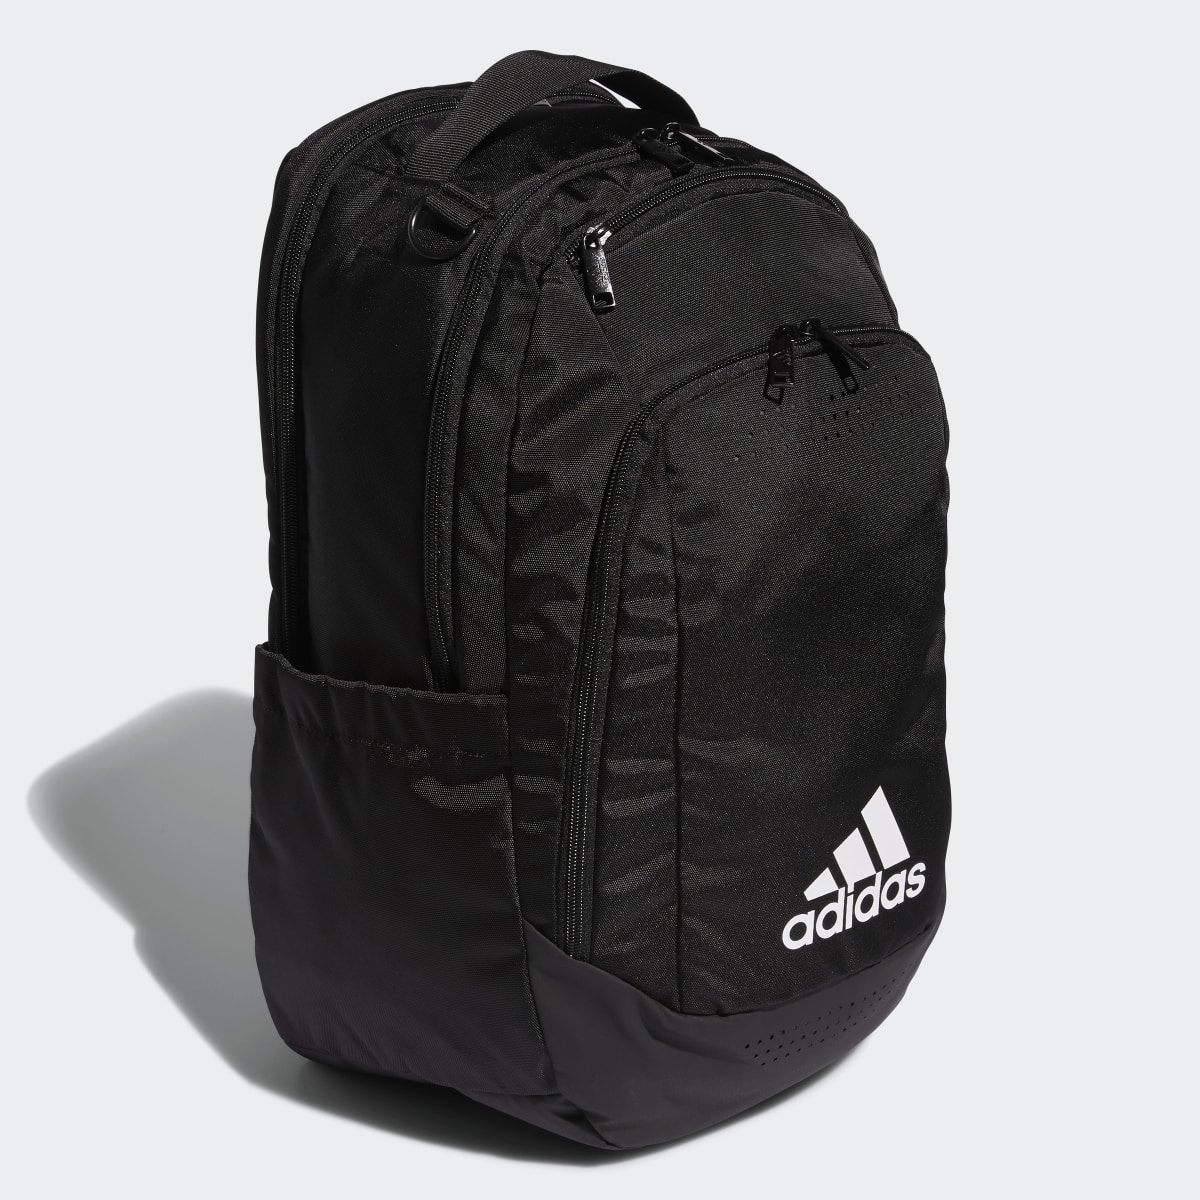 Adidas Defender Backpack. 4